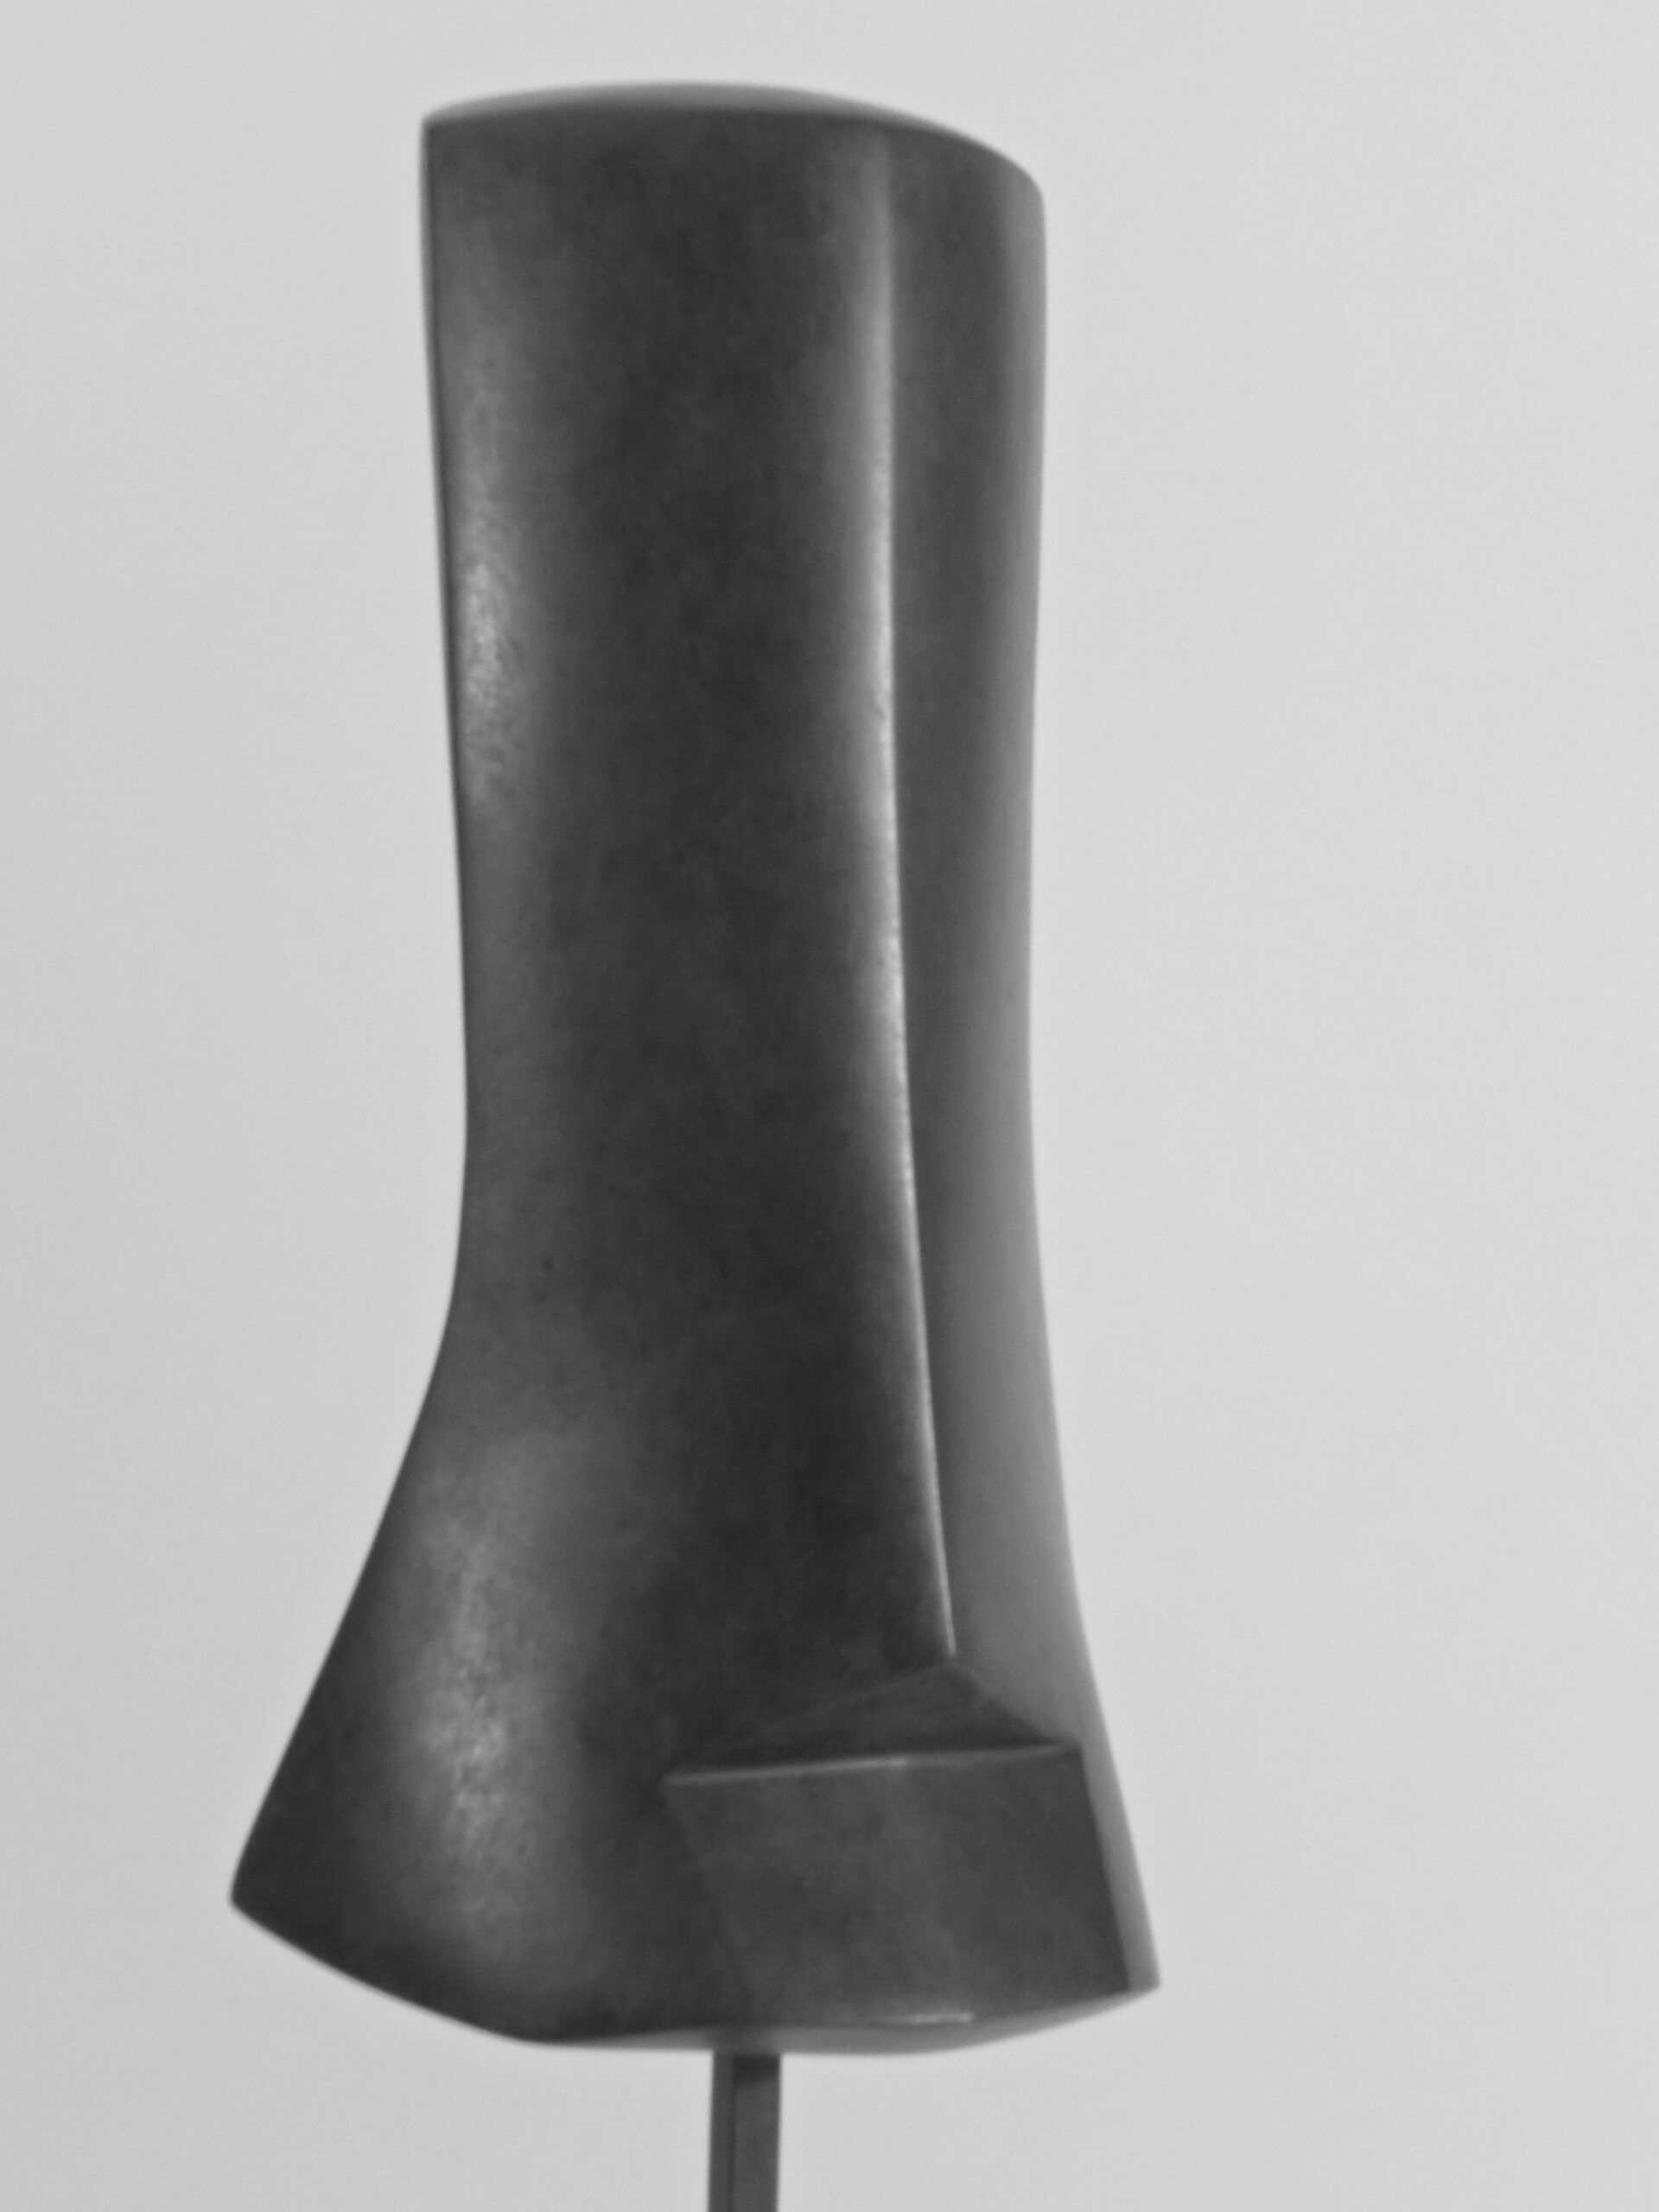 6 La Luxure, 1986, bronze, h 68 cm